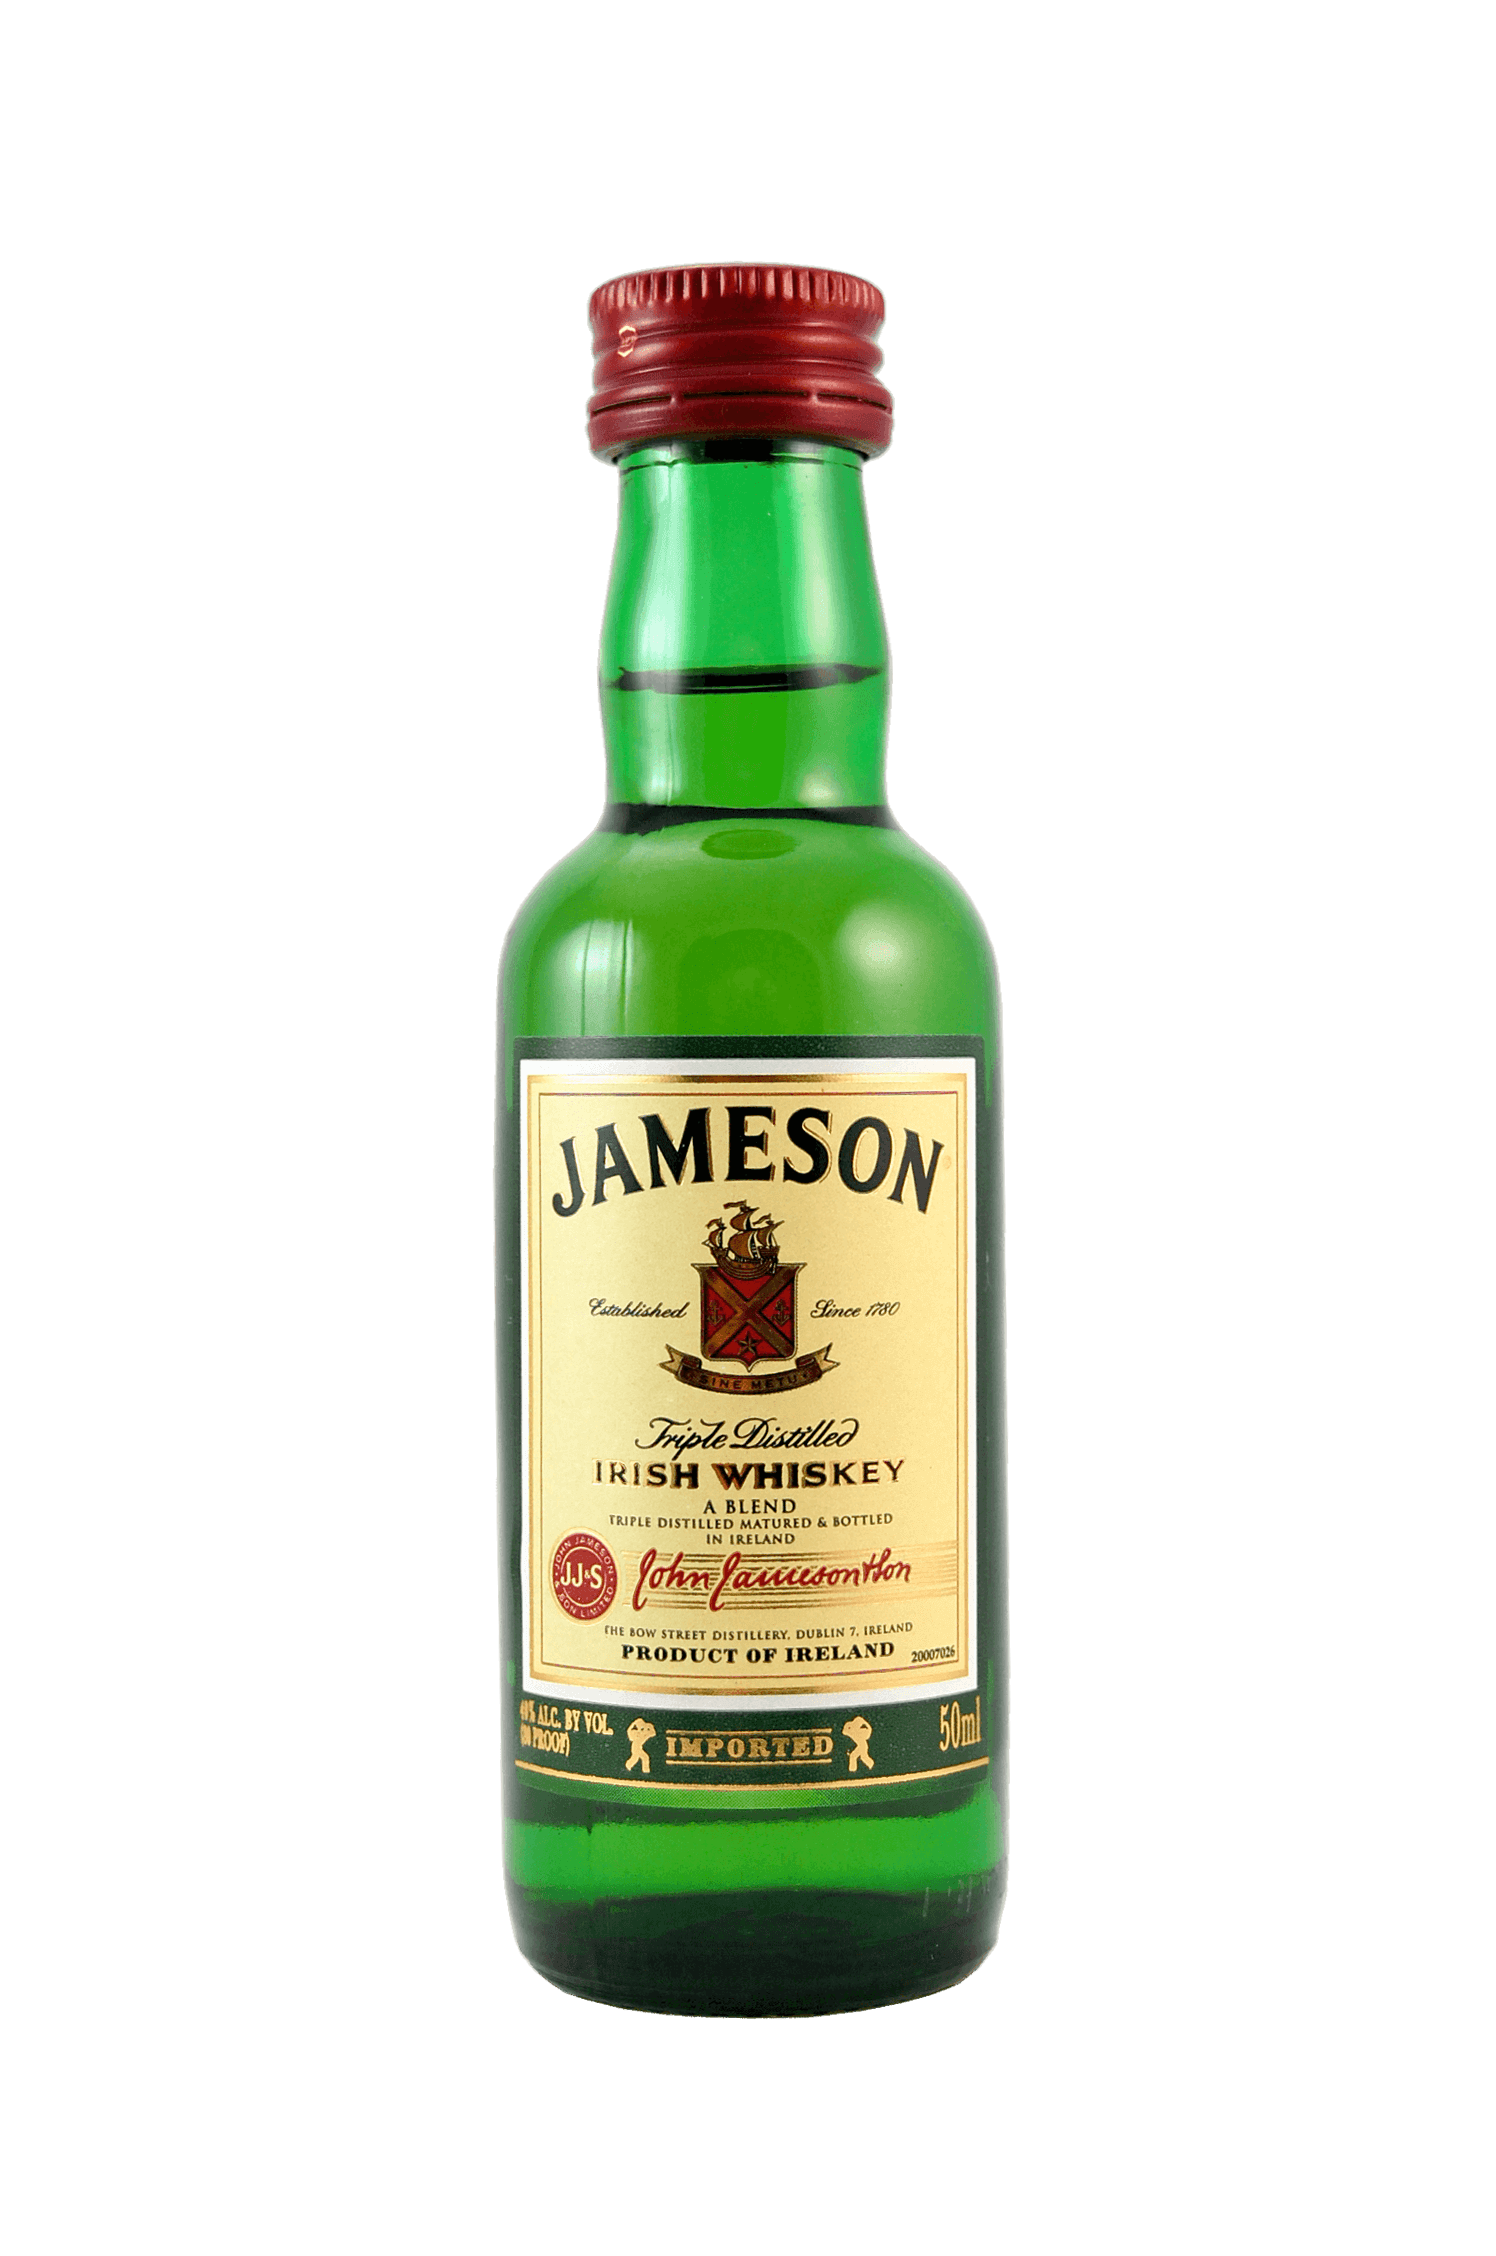 Jameson Irish Whiskey A Blend